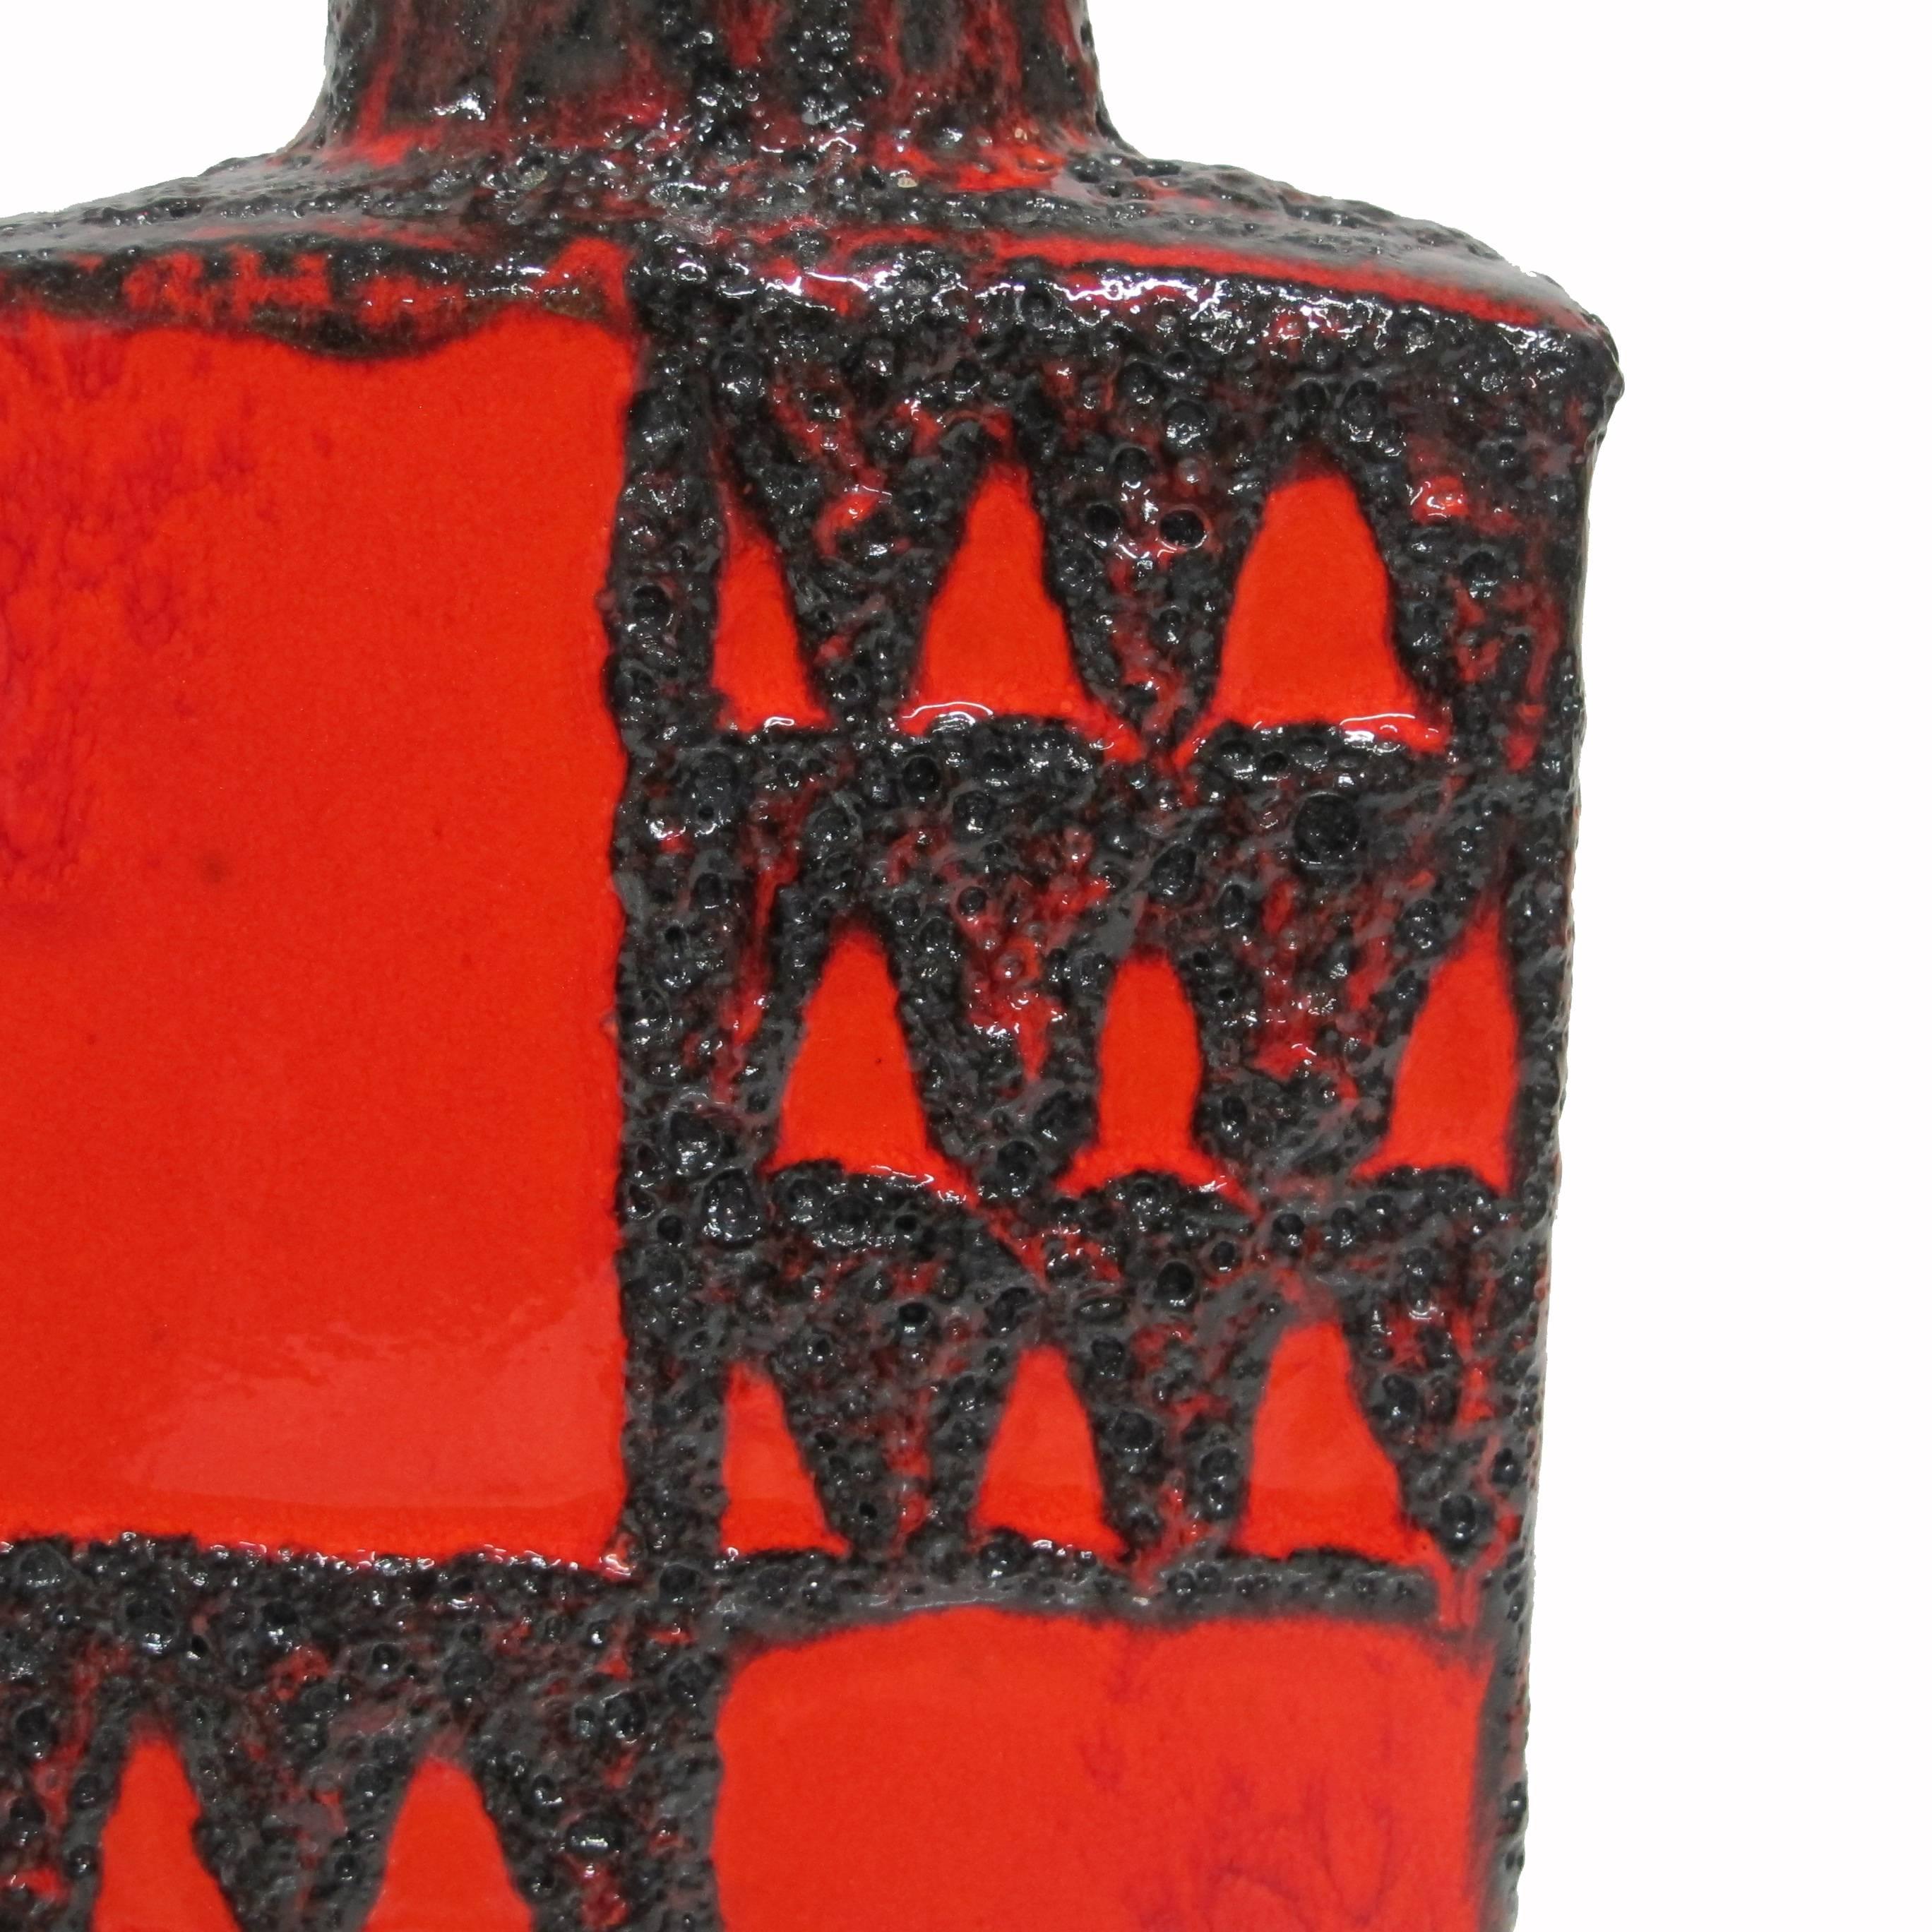 Mid-20th Century Scheurich Keramic Vase, Lava Glaze, Ceramic, Red and Black, Geometric, Signed